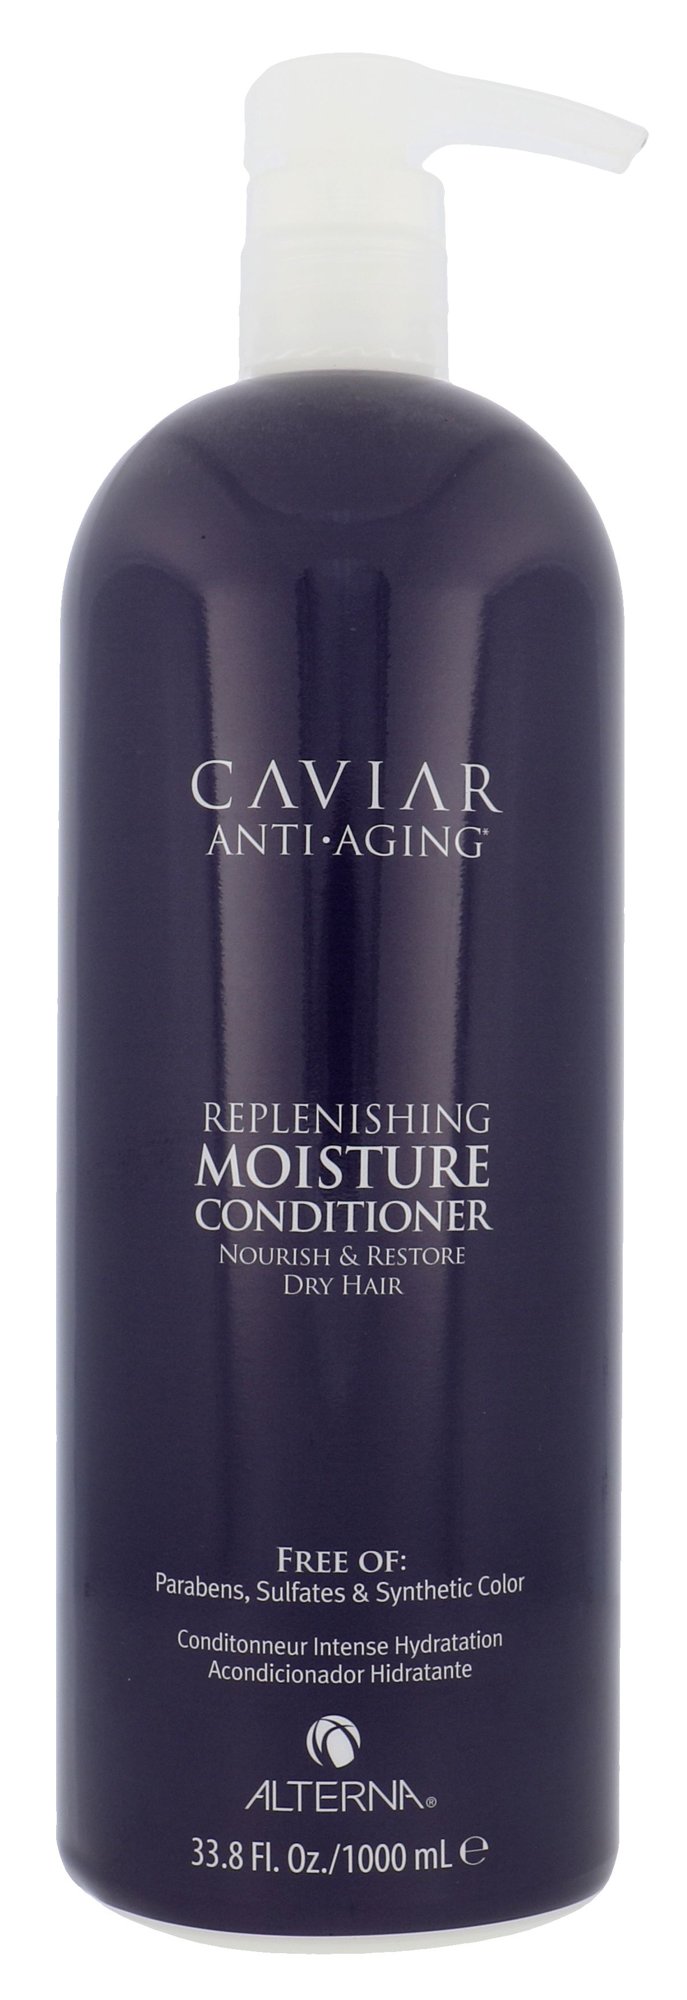 Alterna Caviar Anti-Aging Replenishing Moisture 1000ml kondicionierius